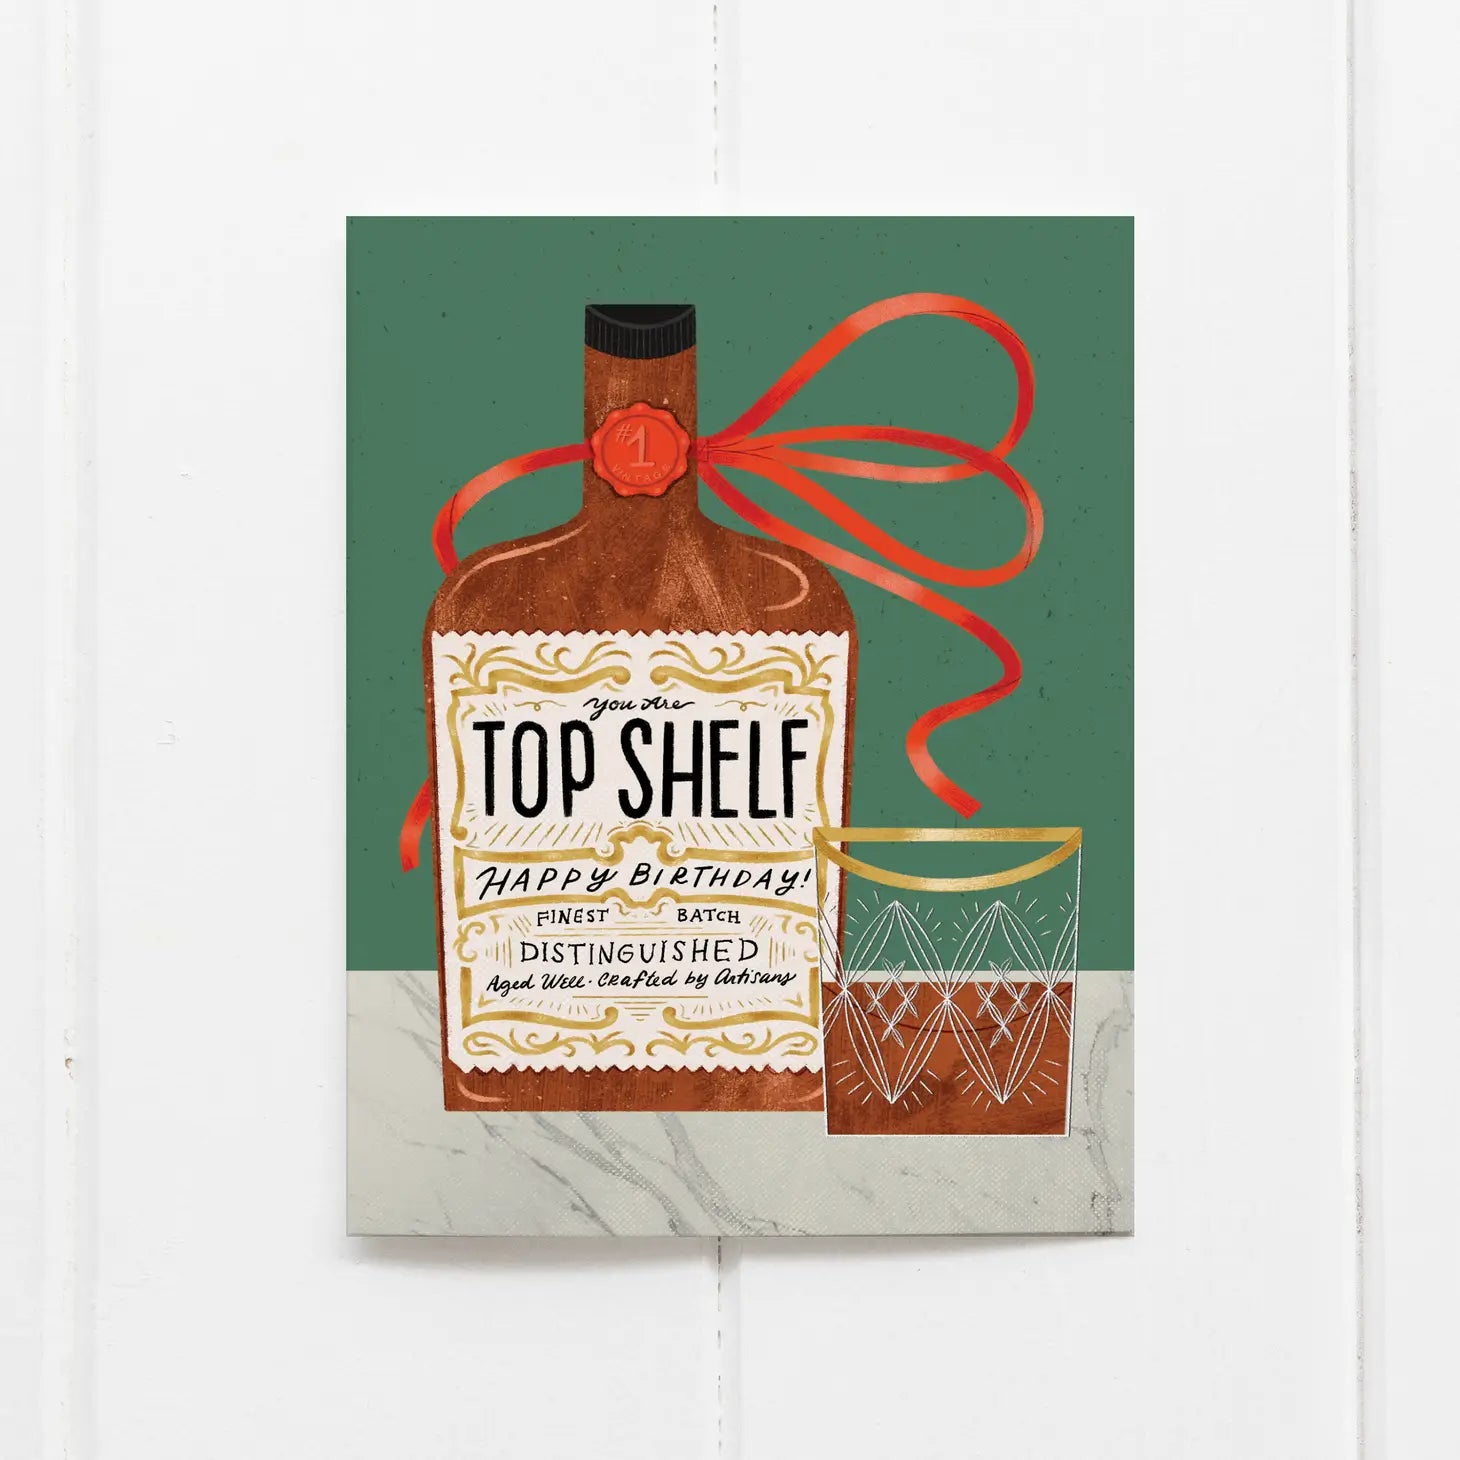 Top Shelf Whisky Card